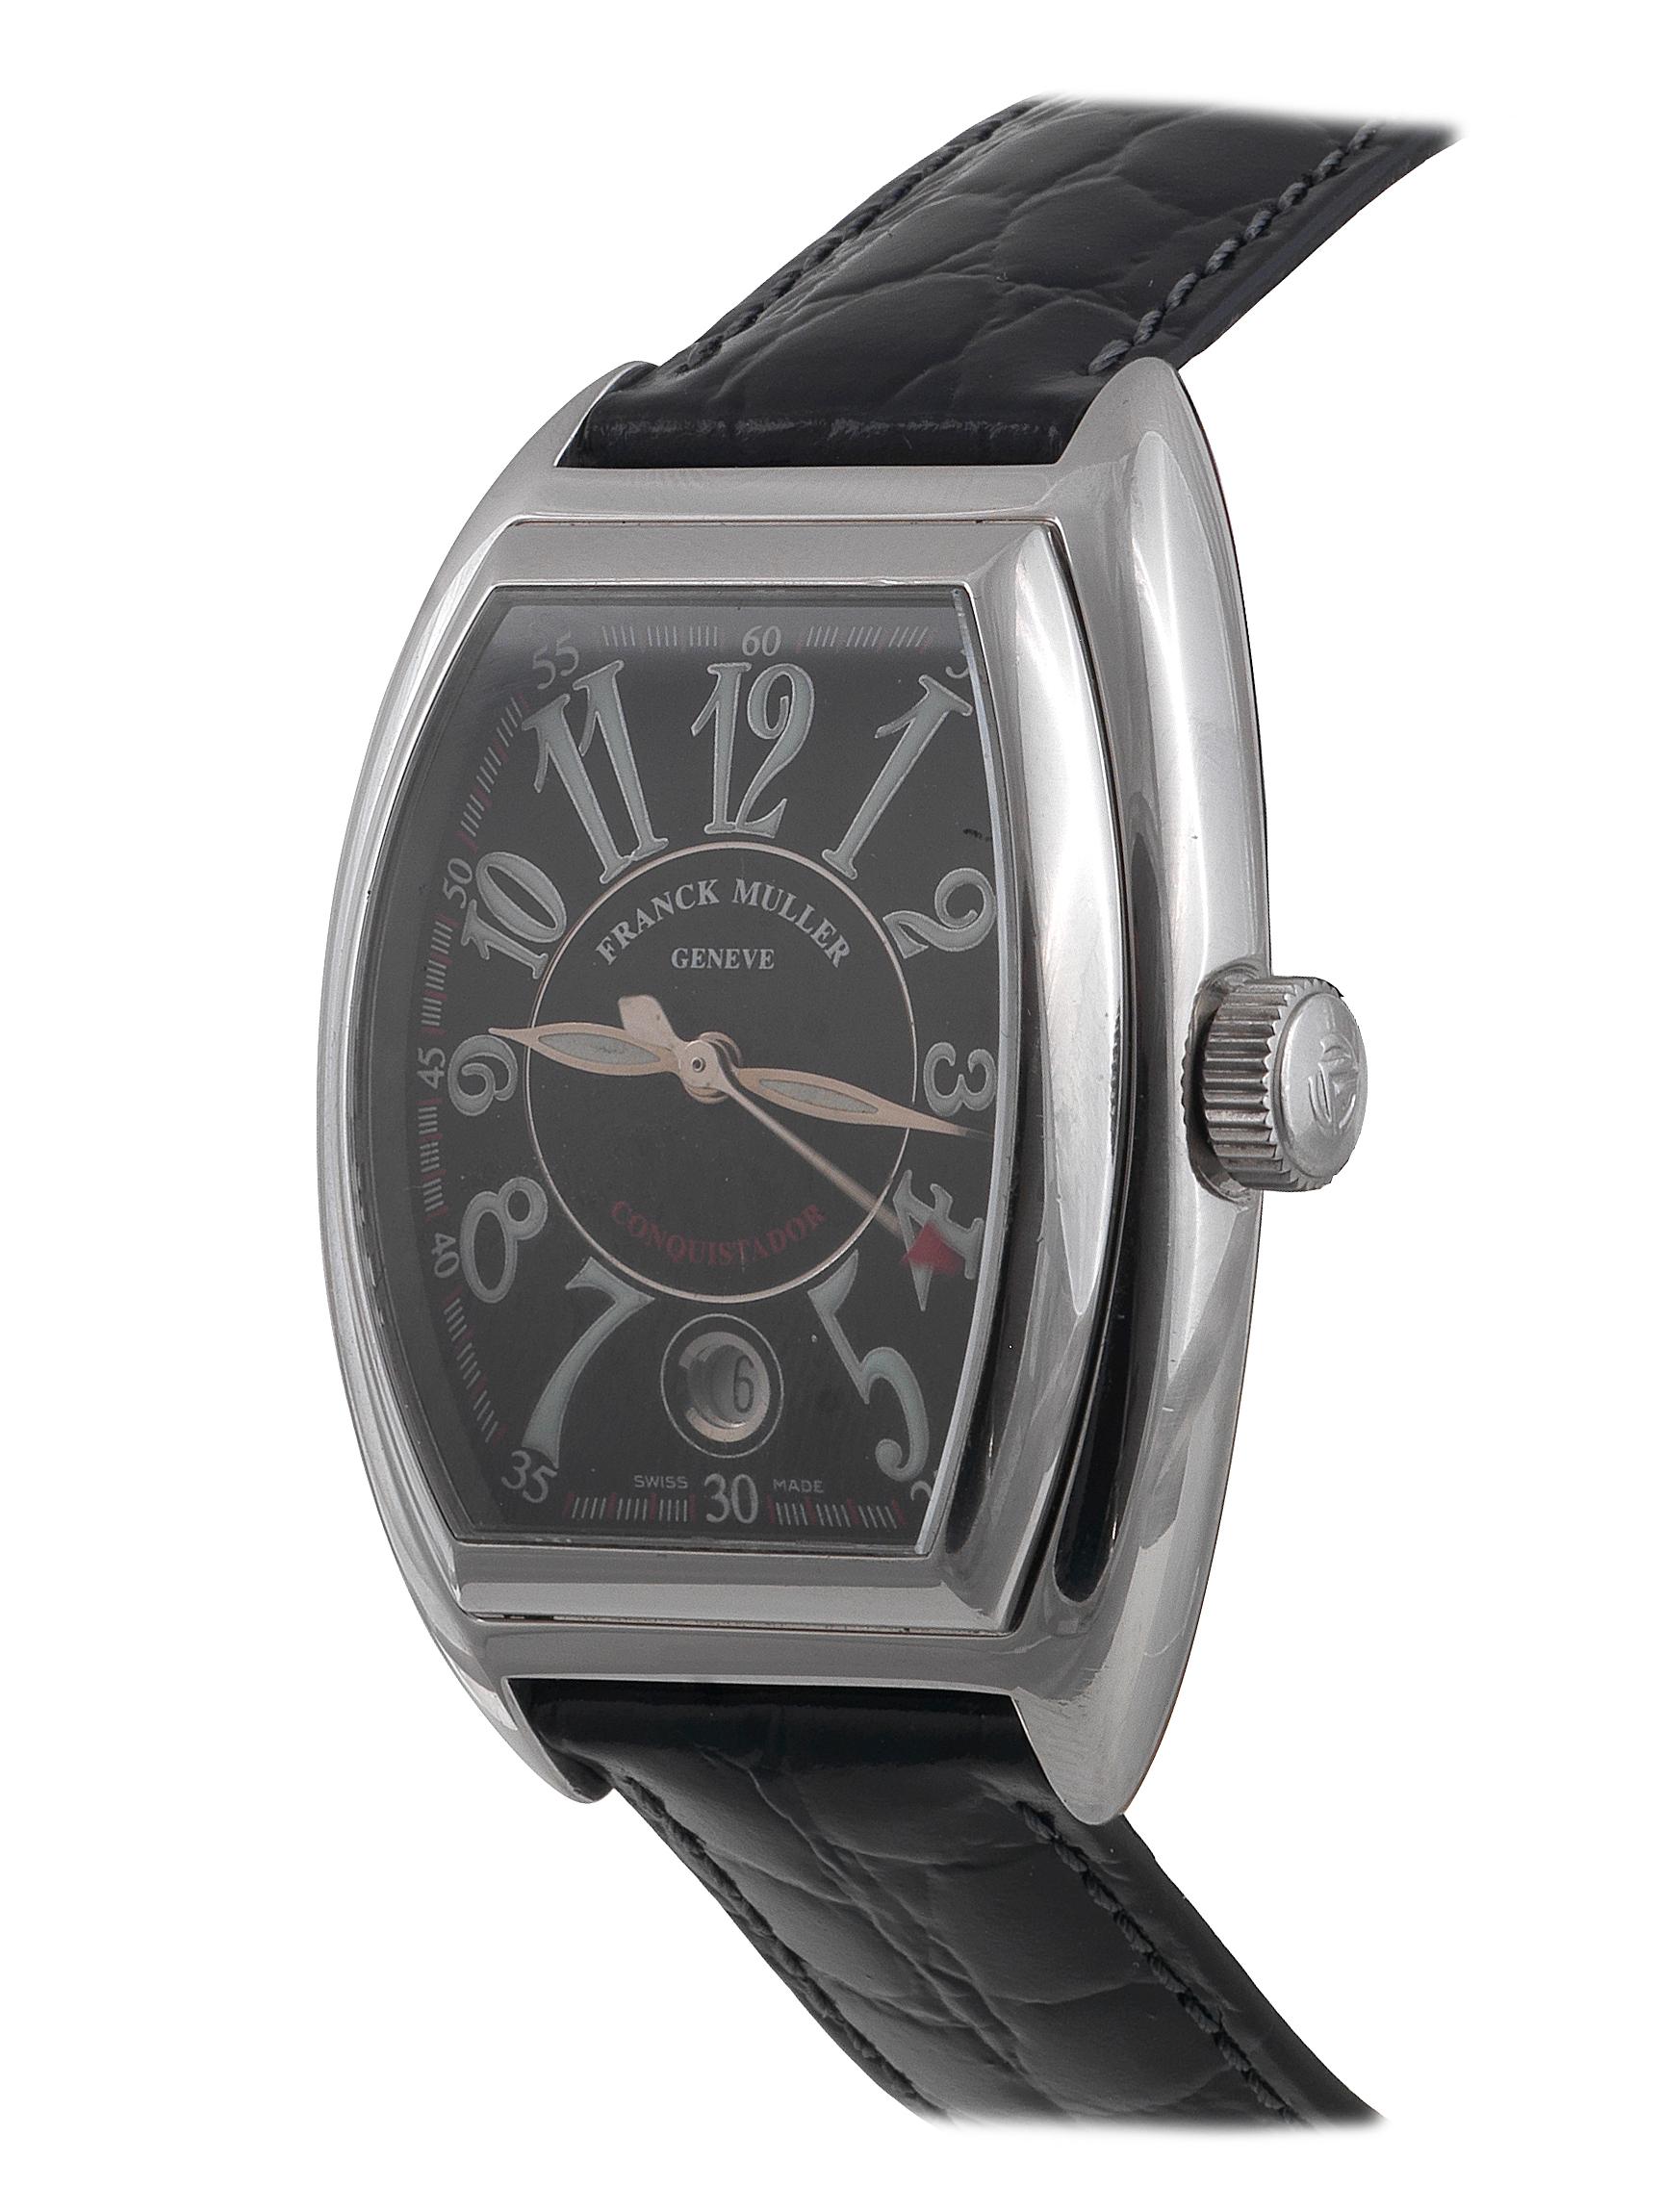 Contemporary Franck Muller Ref. 8005 Conquistador Stainless Steel Wristwatch